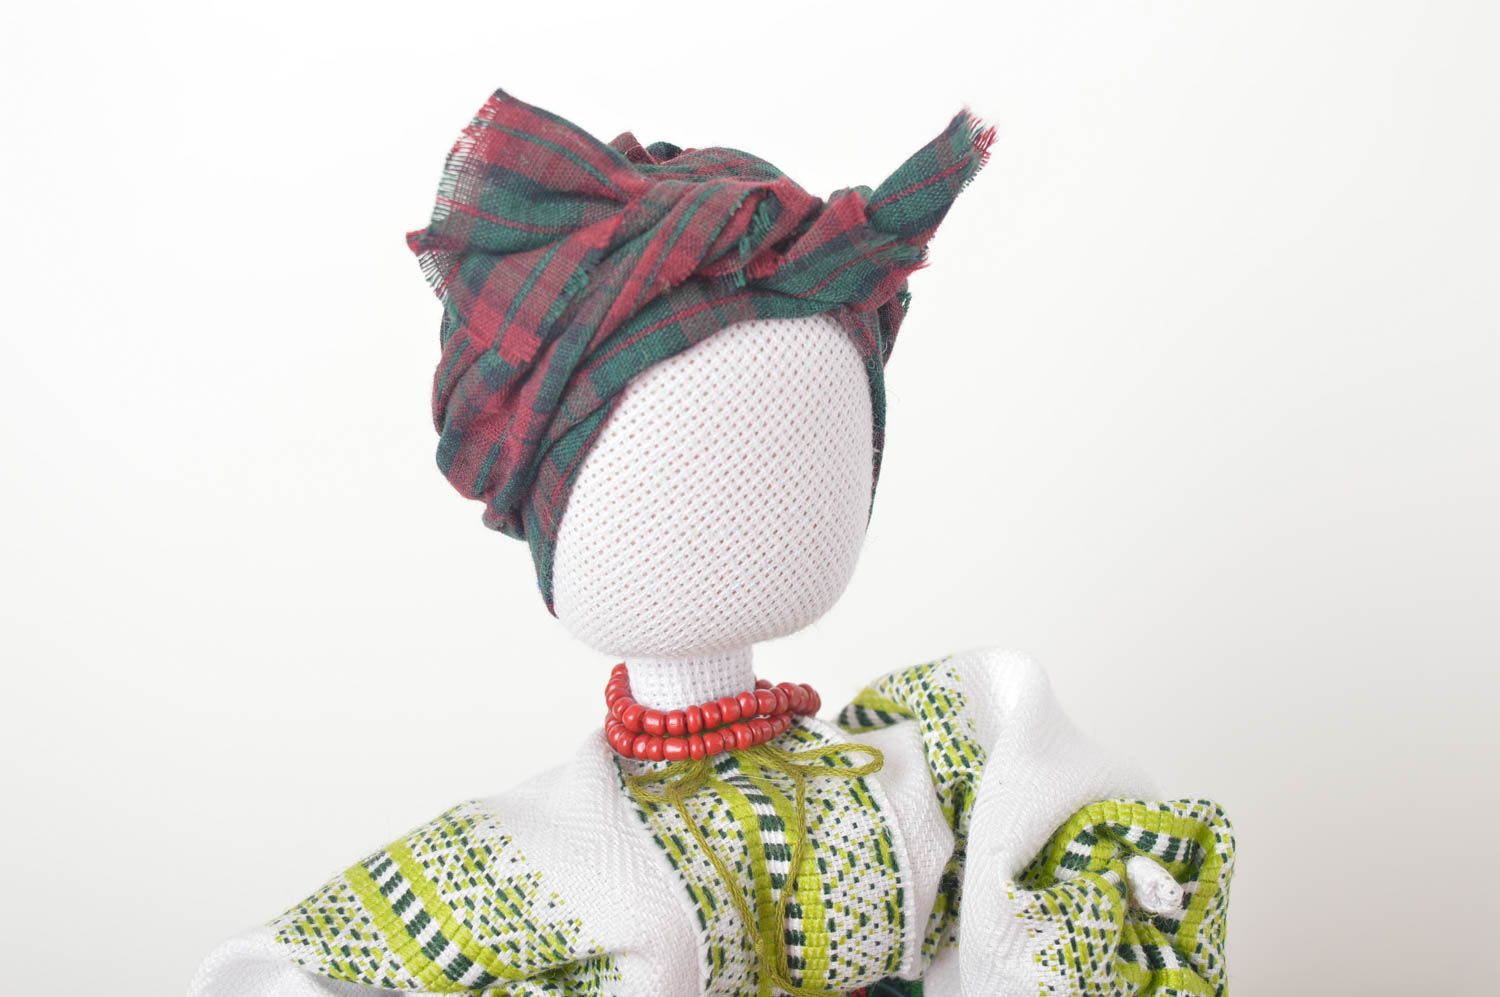 Handmade doll in ethnic dress stuffed toy designer childrens toy decor ideas photo 5